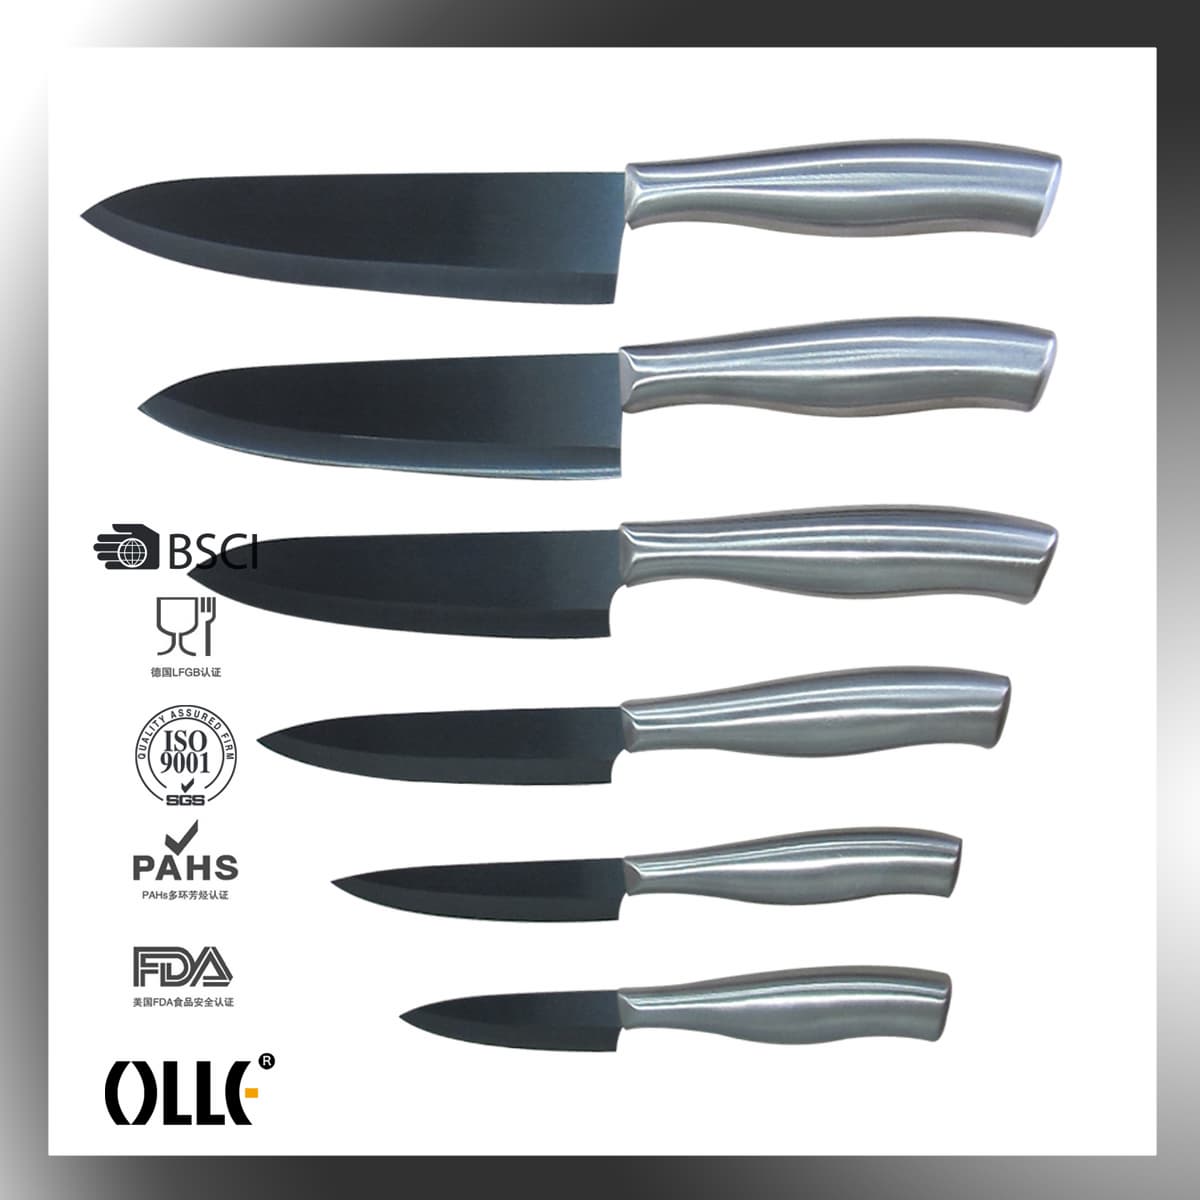 Stainless Steel Handle Ceramic Knife